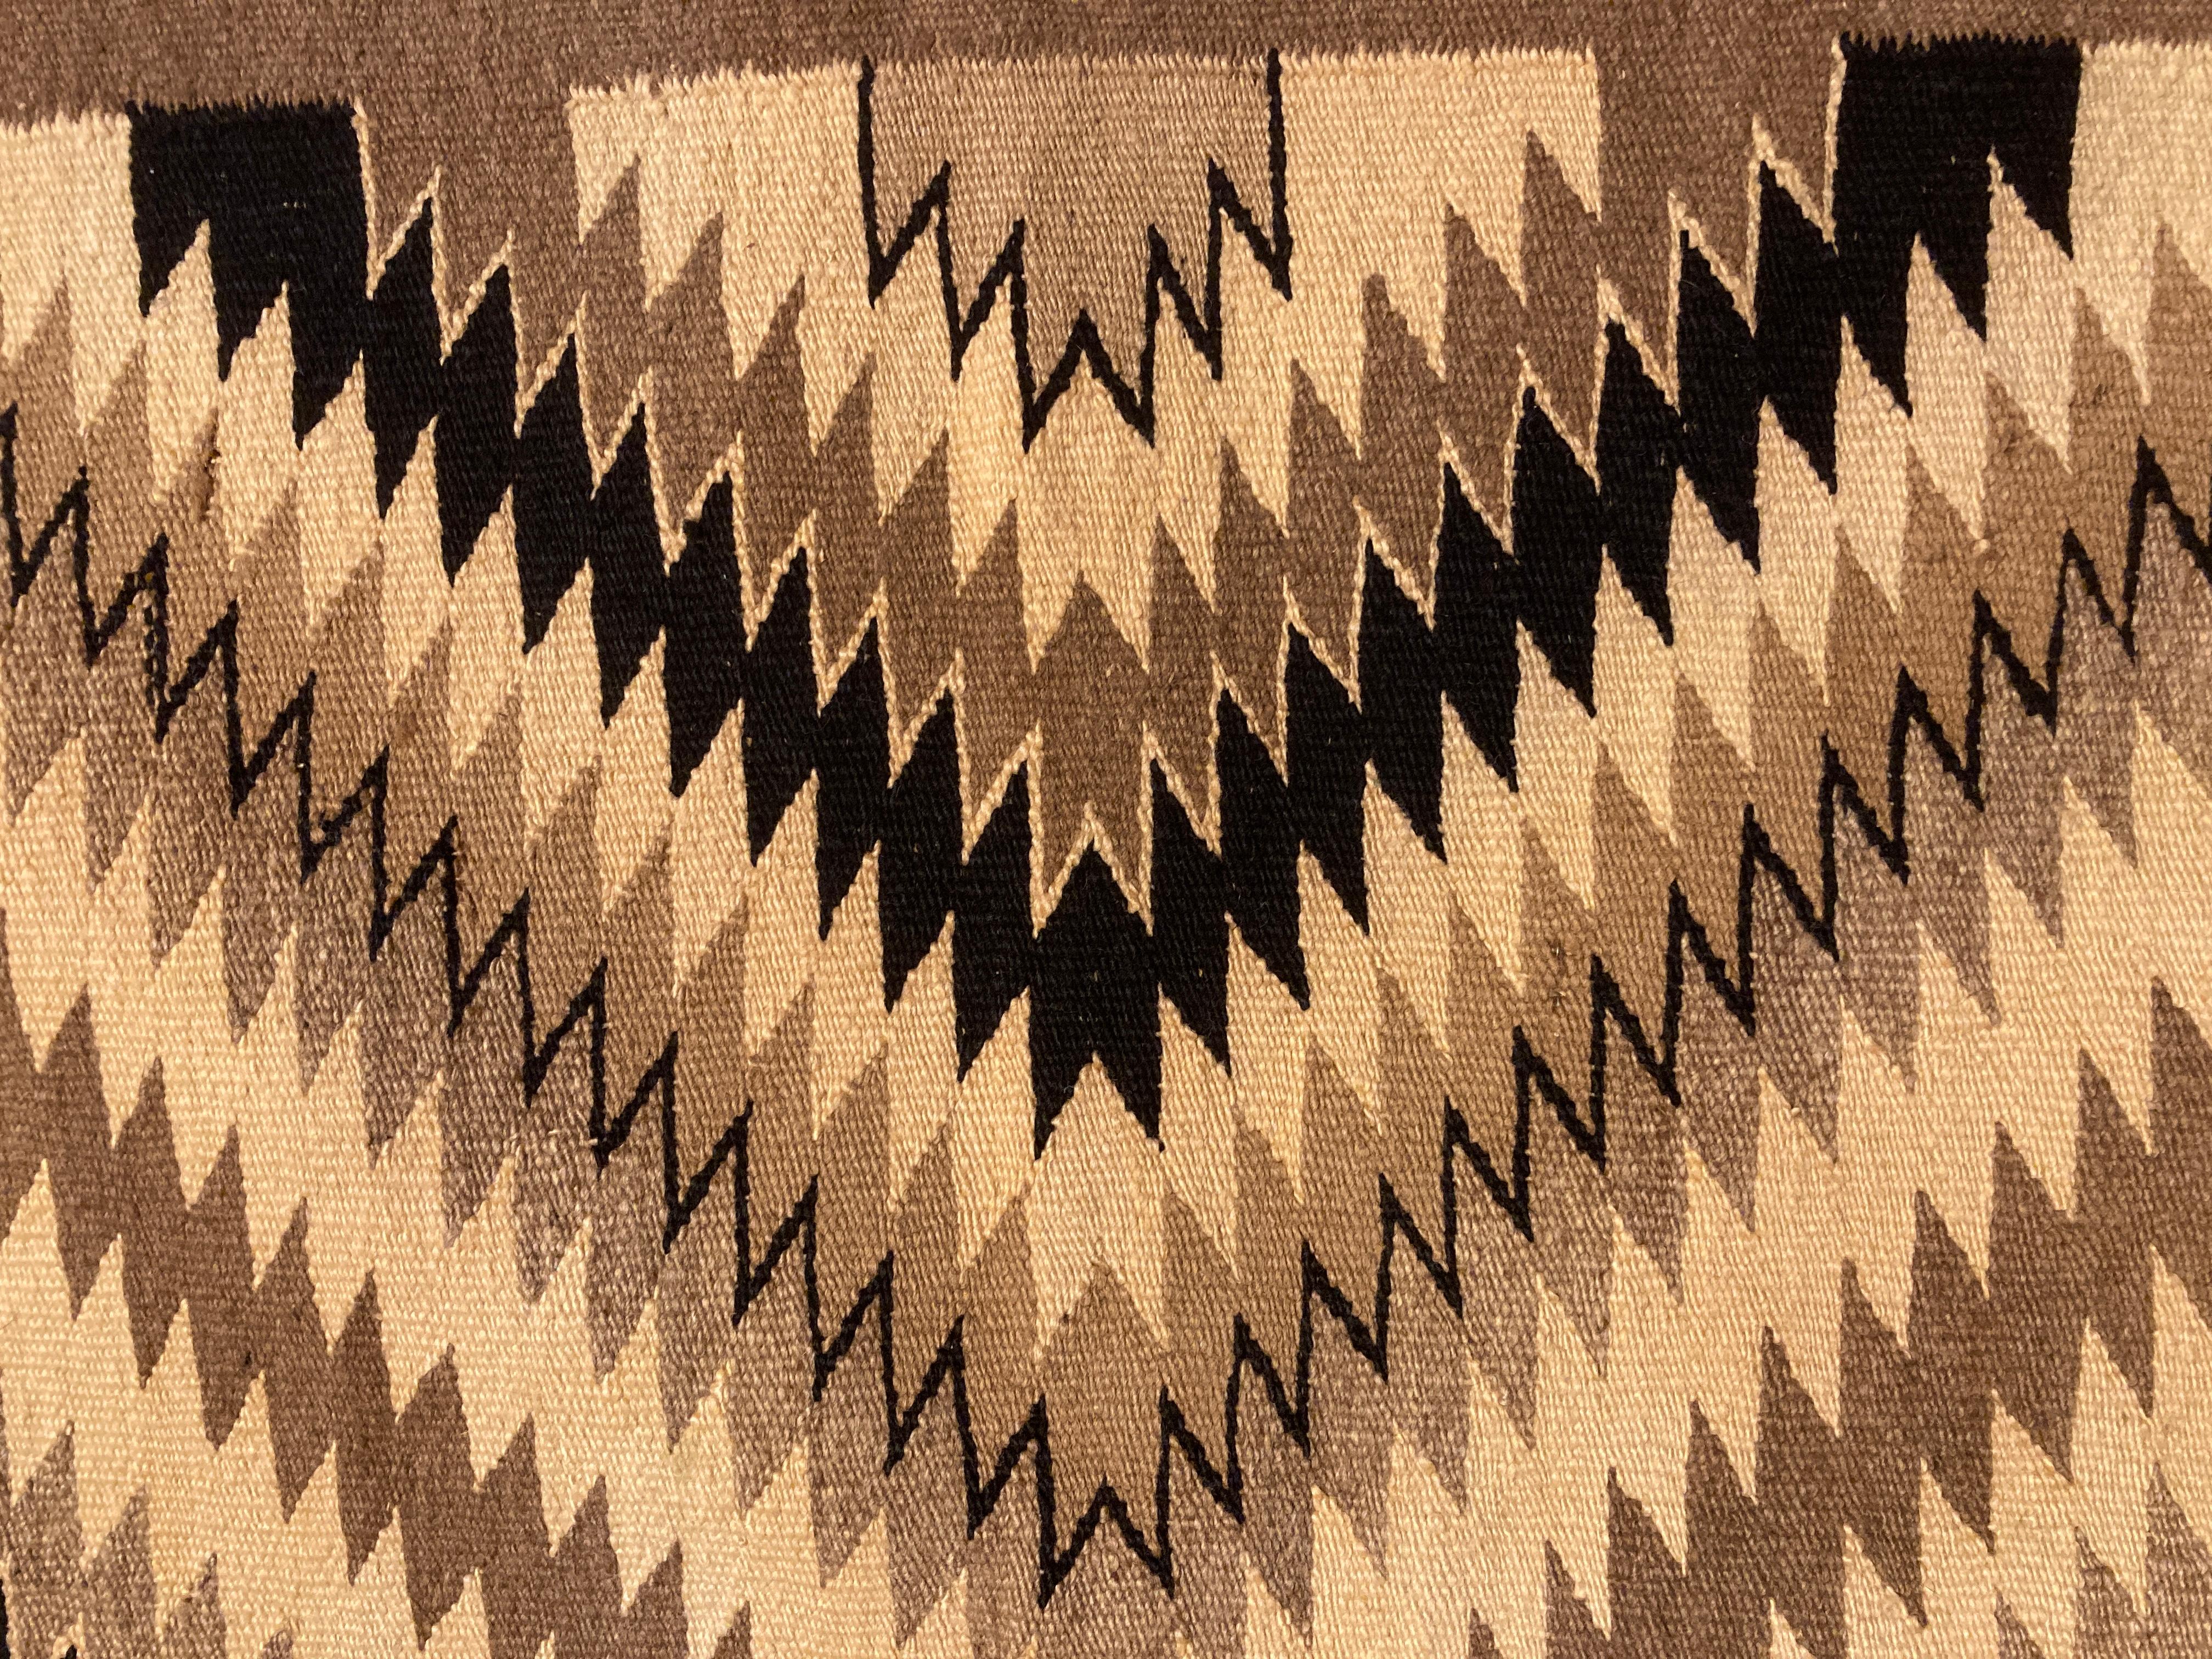 American Small Navajo Rug in Earthtone Colors